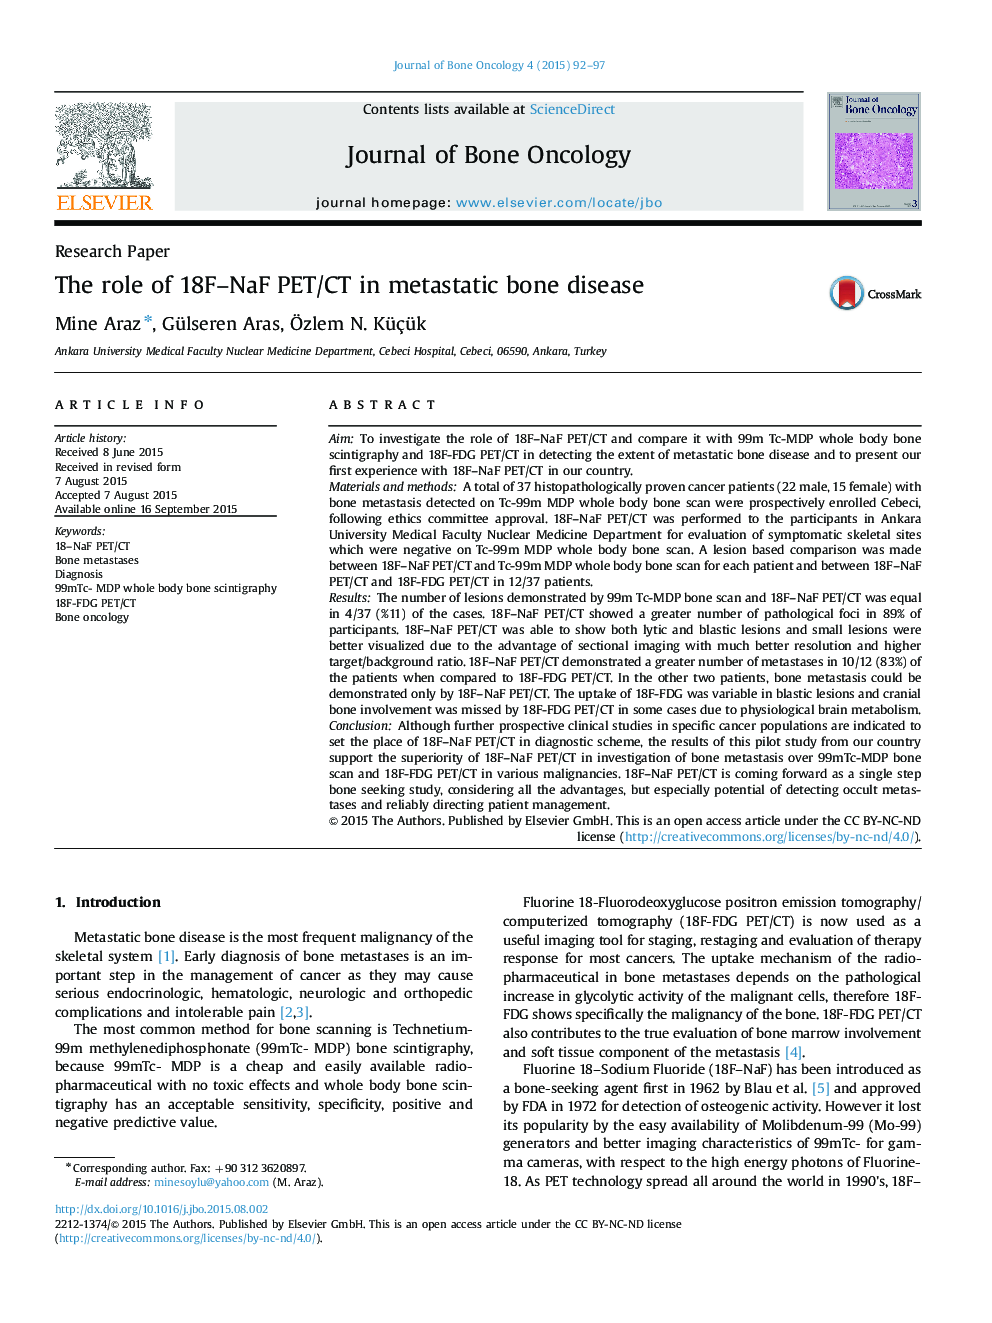 The role of 18F–NaF PET/CT in metastatic bone disease